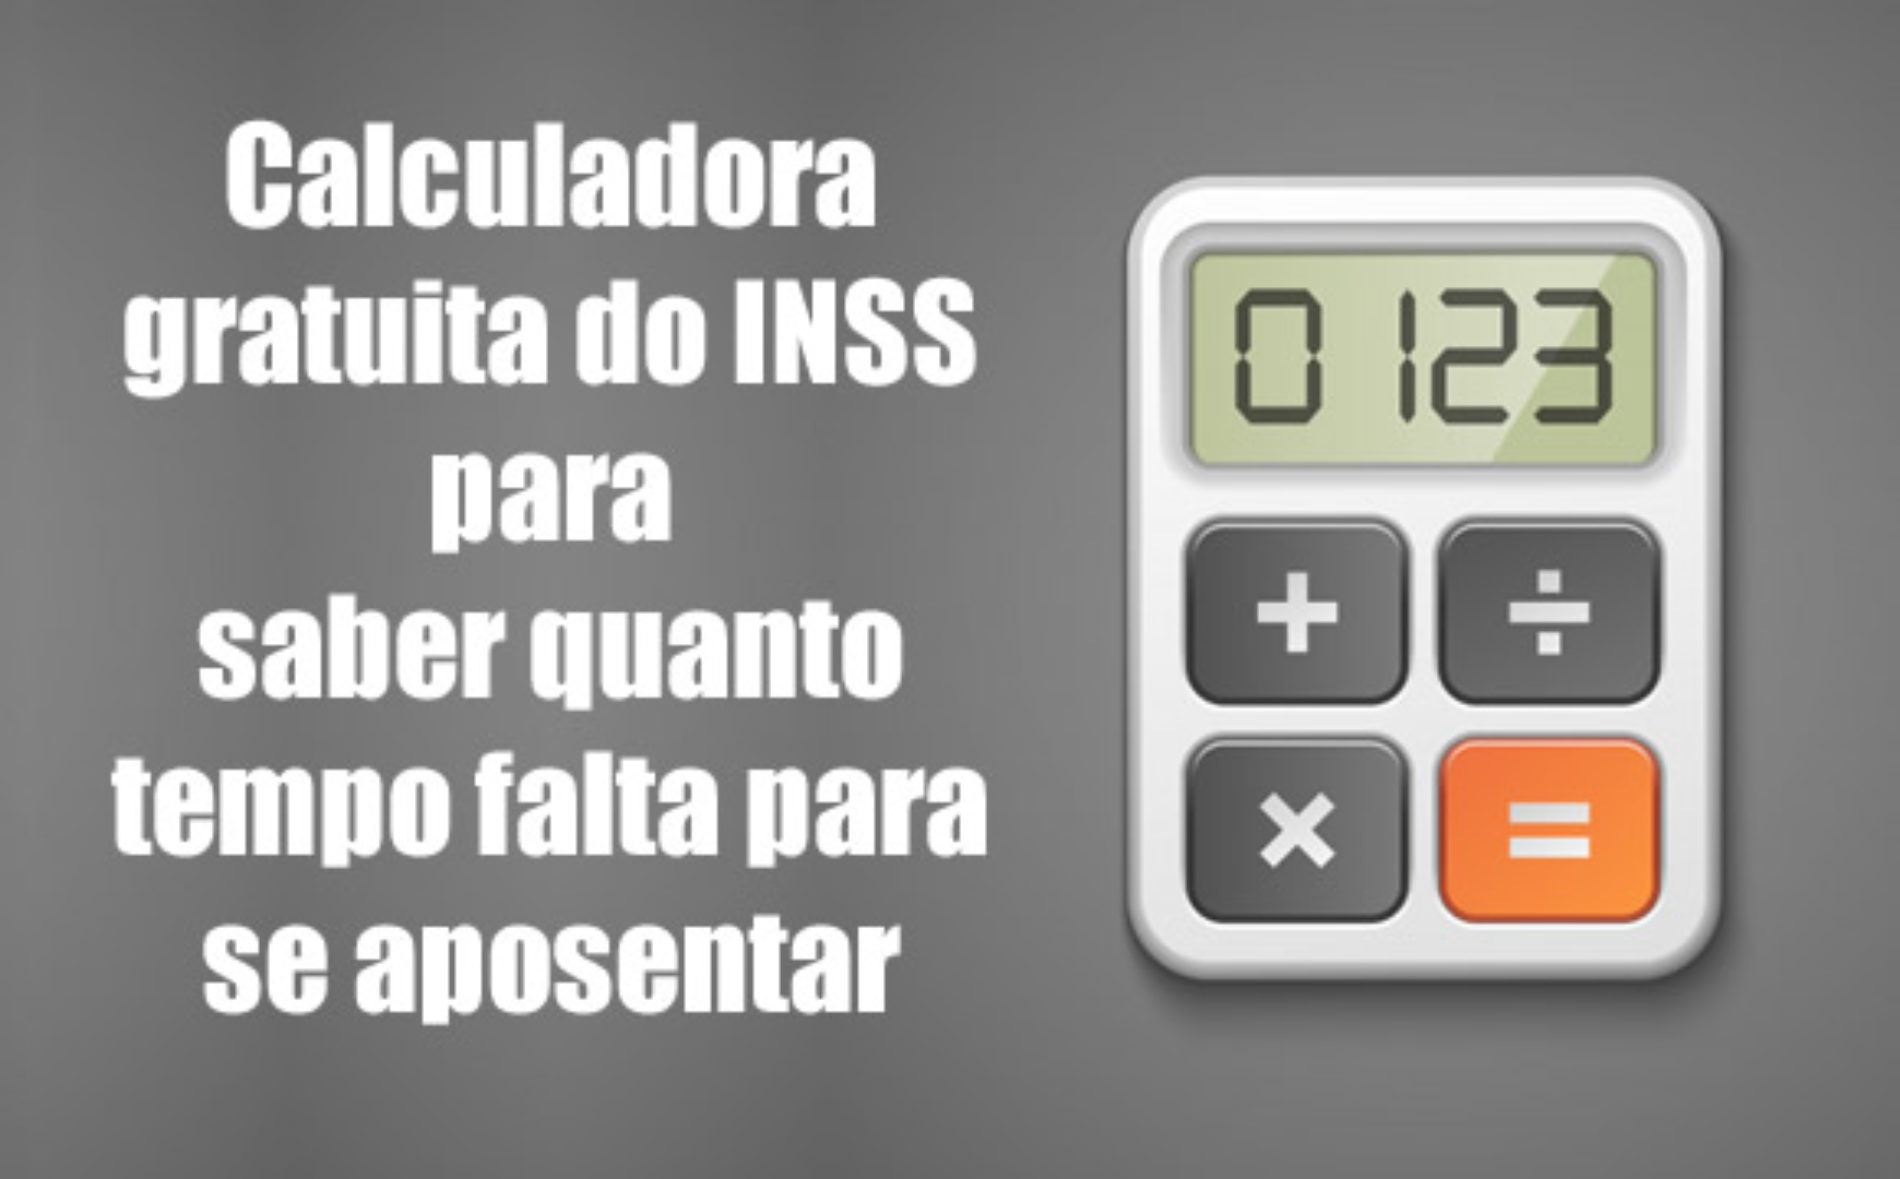 Calculadora online do INSS Quanto tempo falta para aposentar?